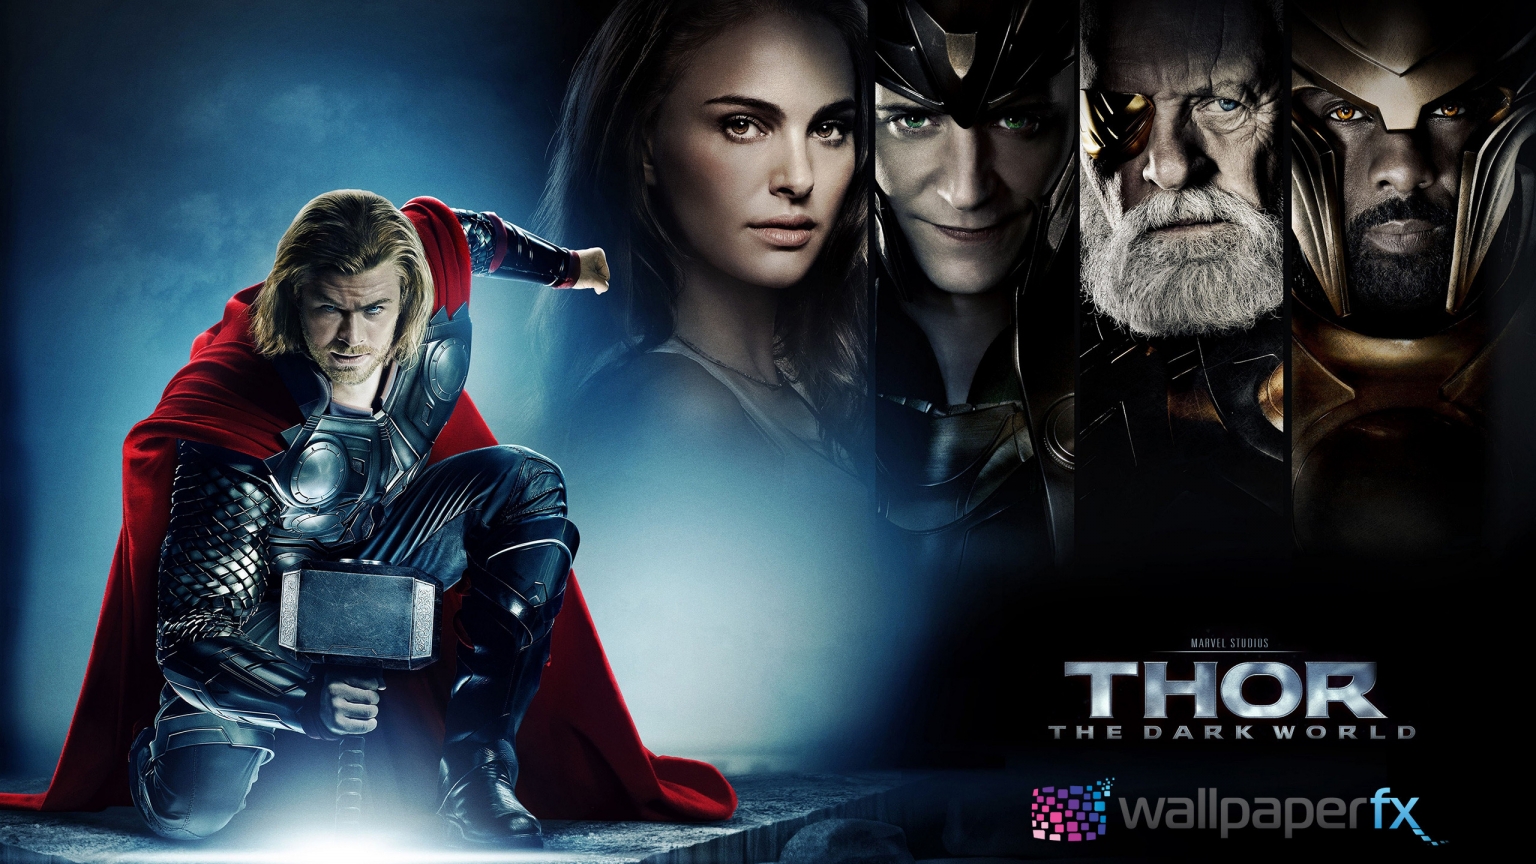 Thor The Dark World for 1536 x 864 HDTV resolution